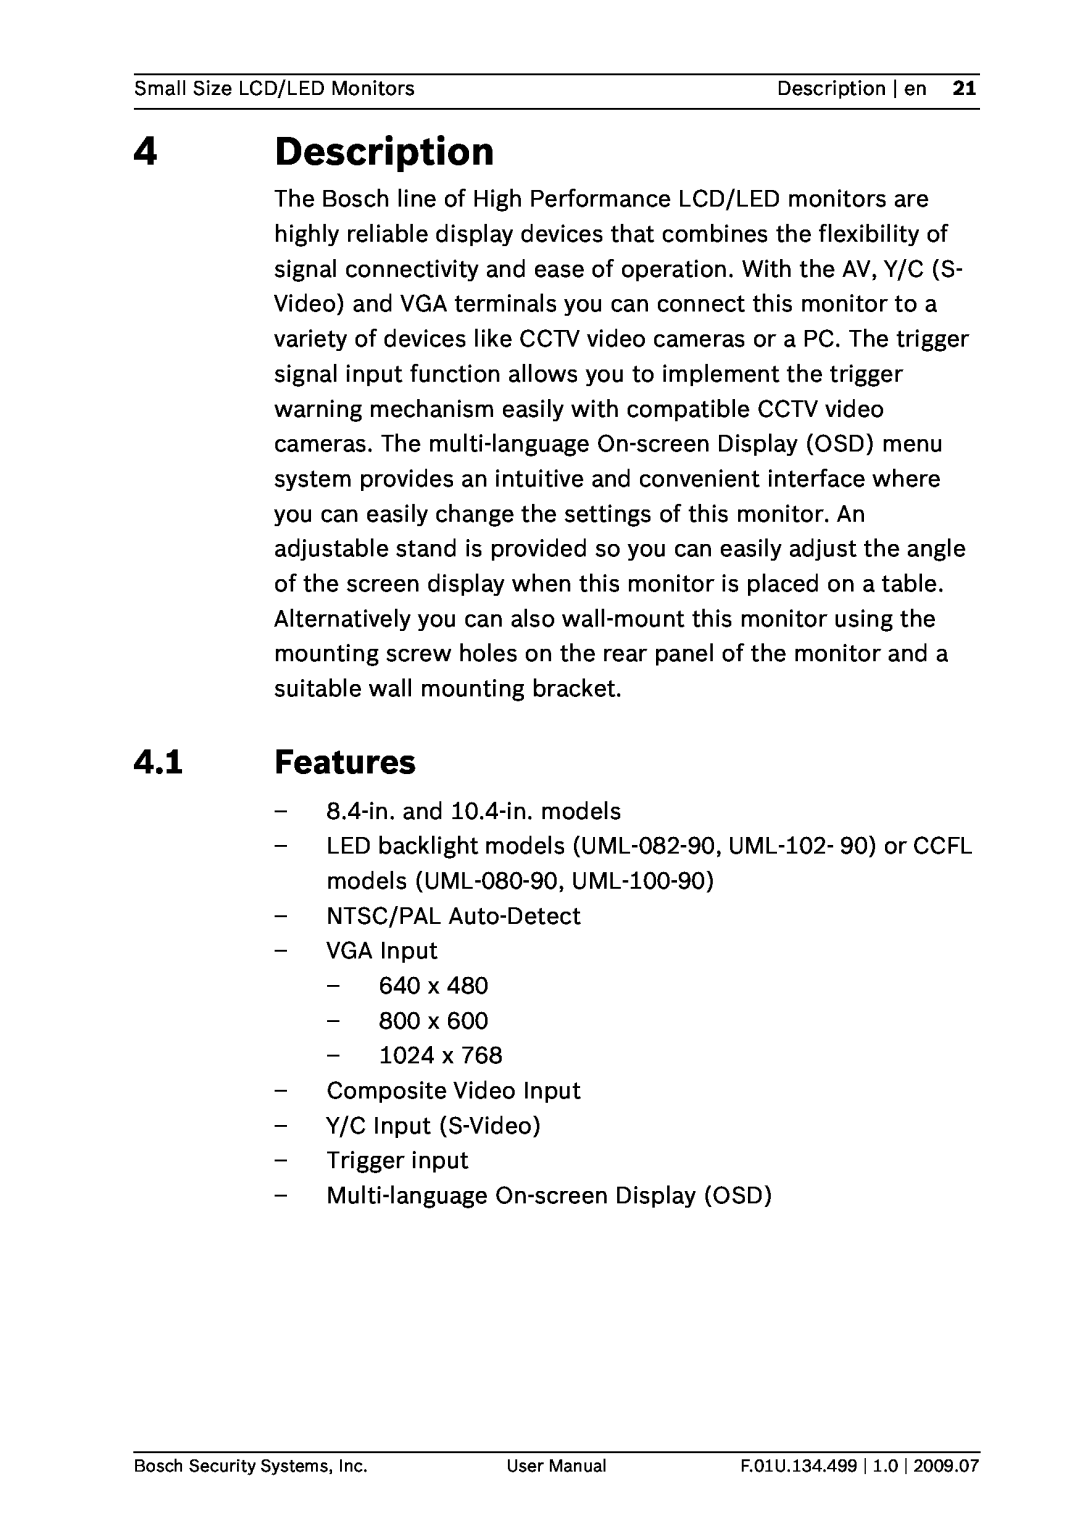 Bosch Appliances UML-100-90, UML-102-90, UML-080-90, UML-082-90 user manual Description, Features 